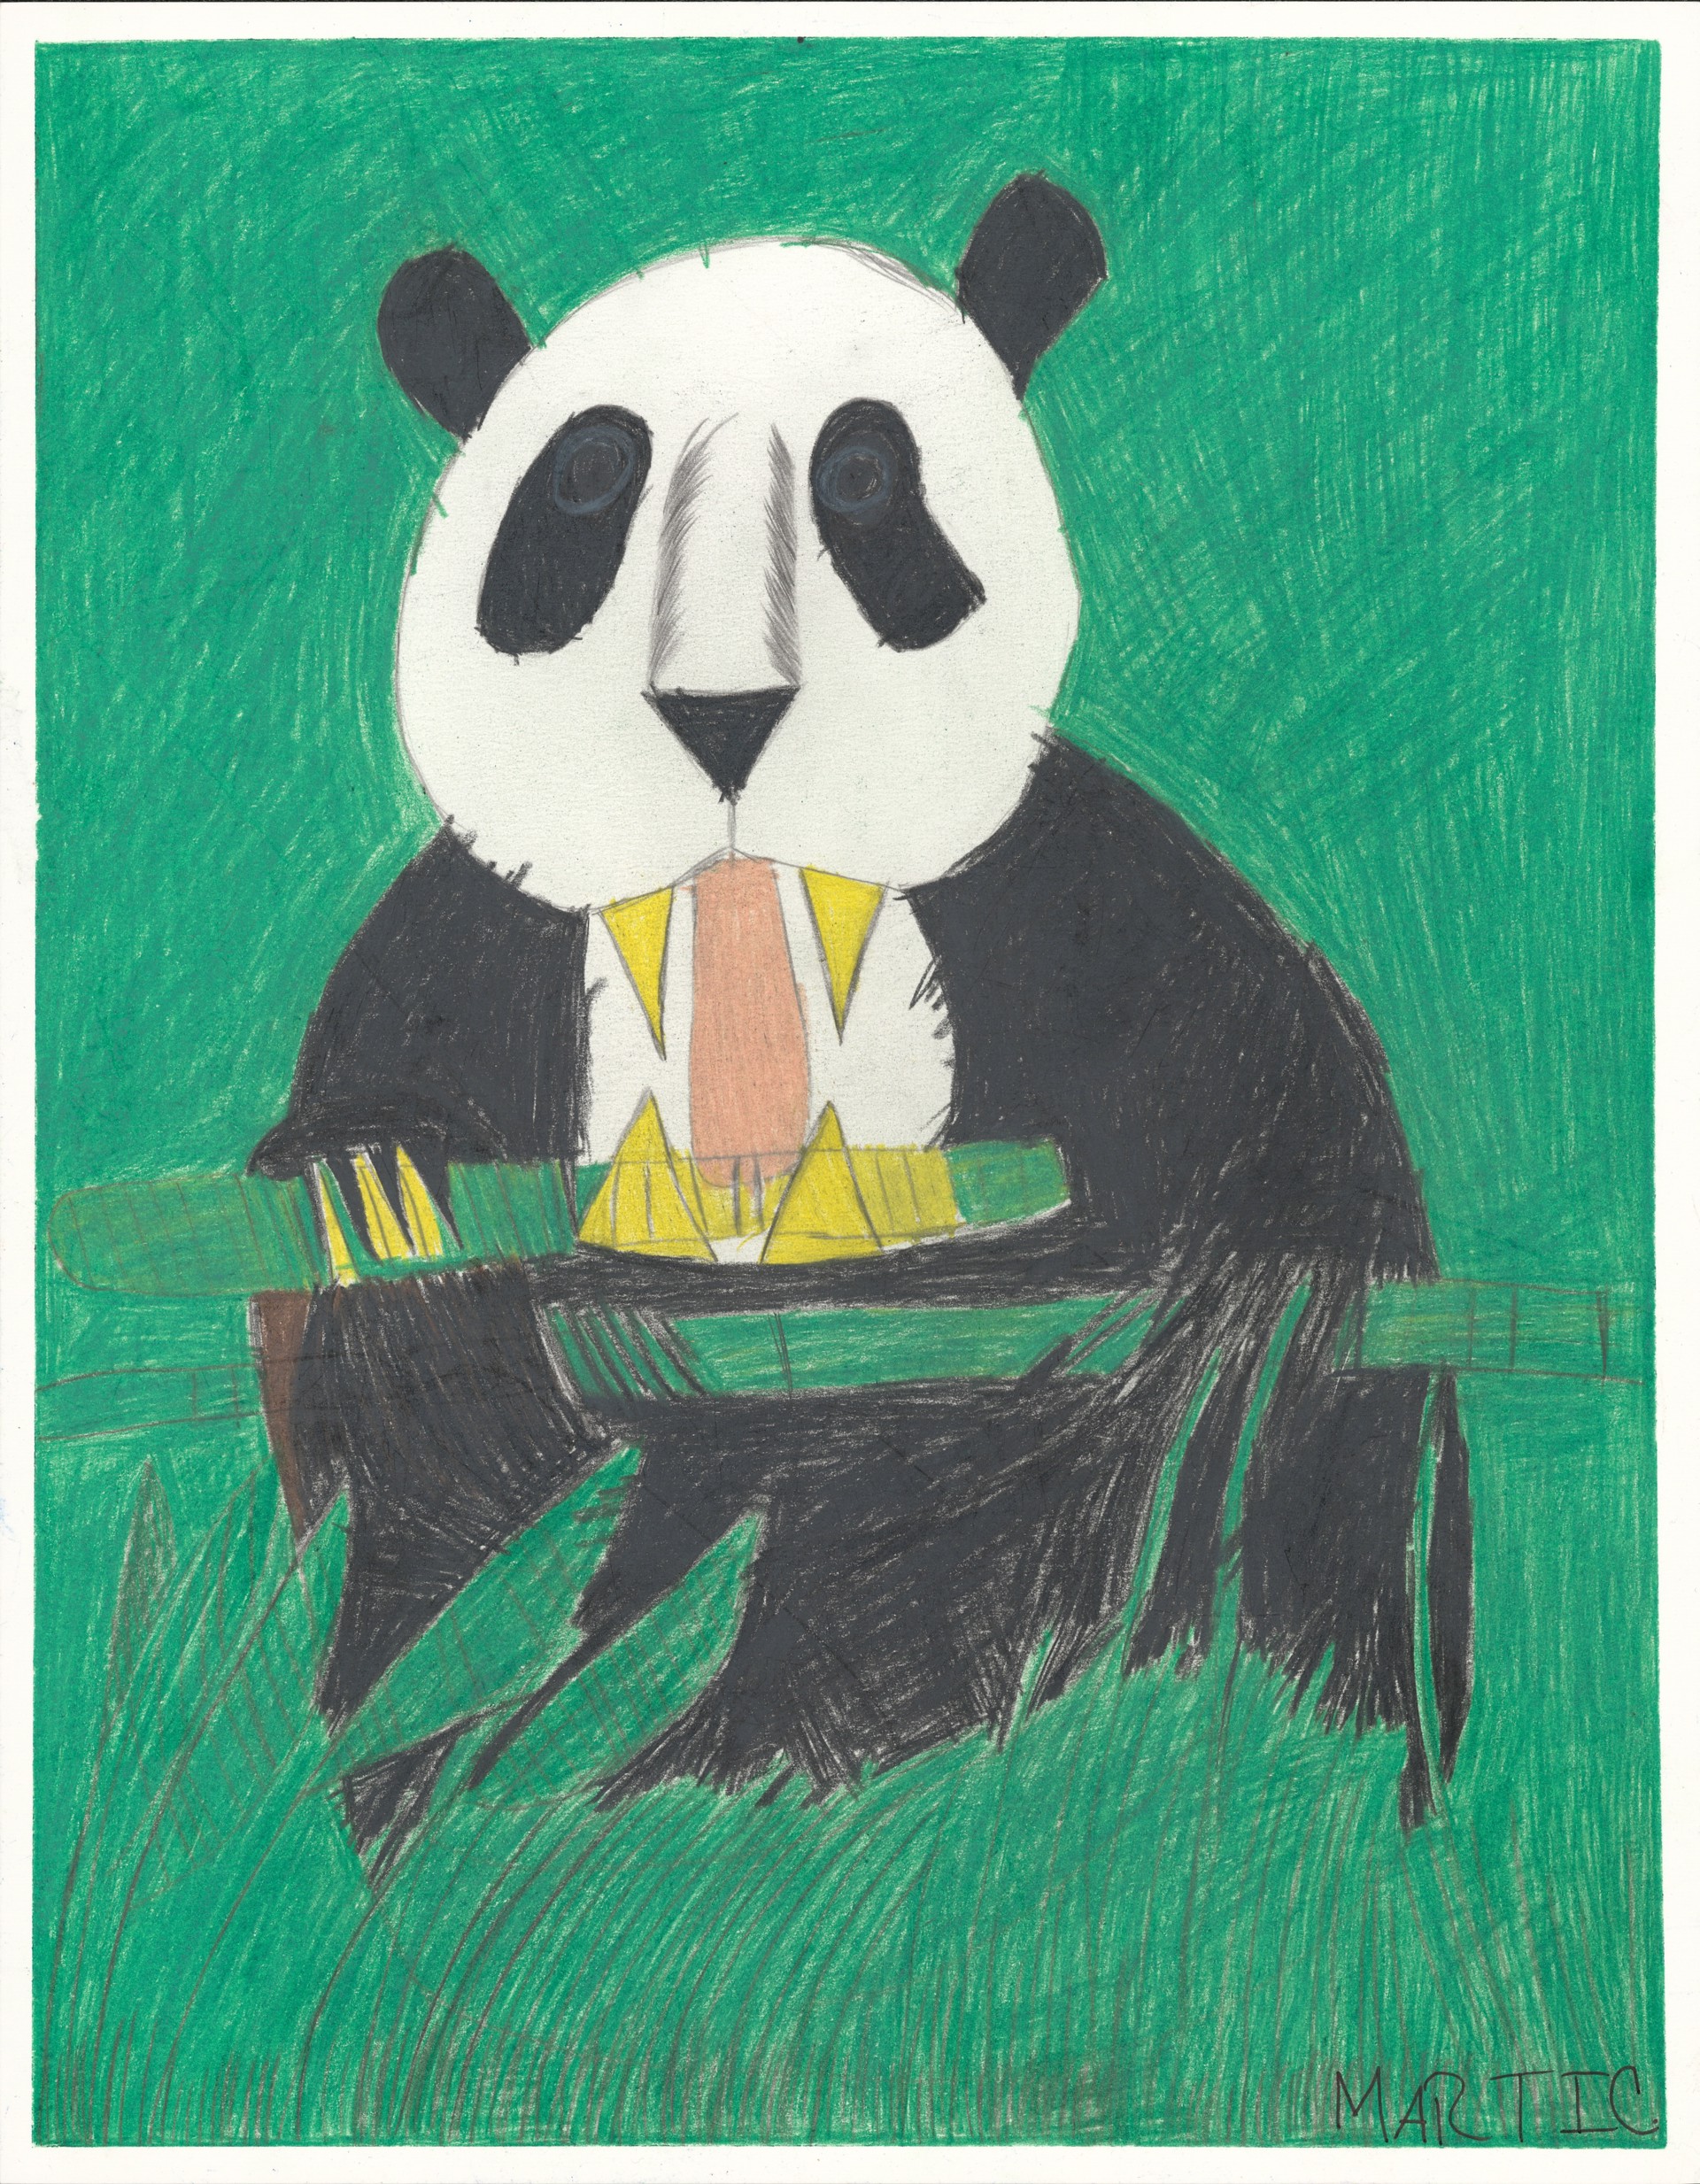 Giant Panda by Marti Clark